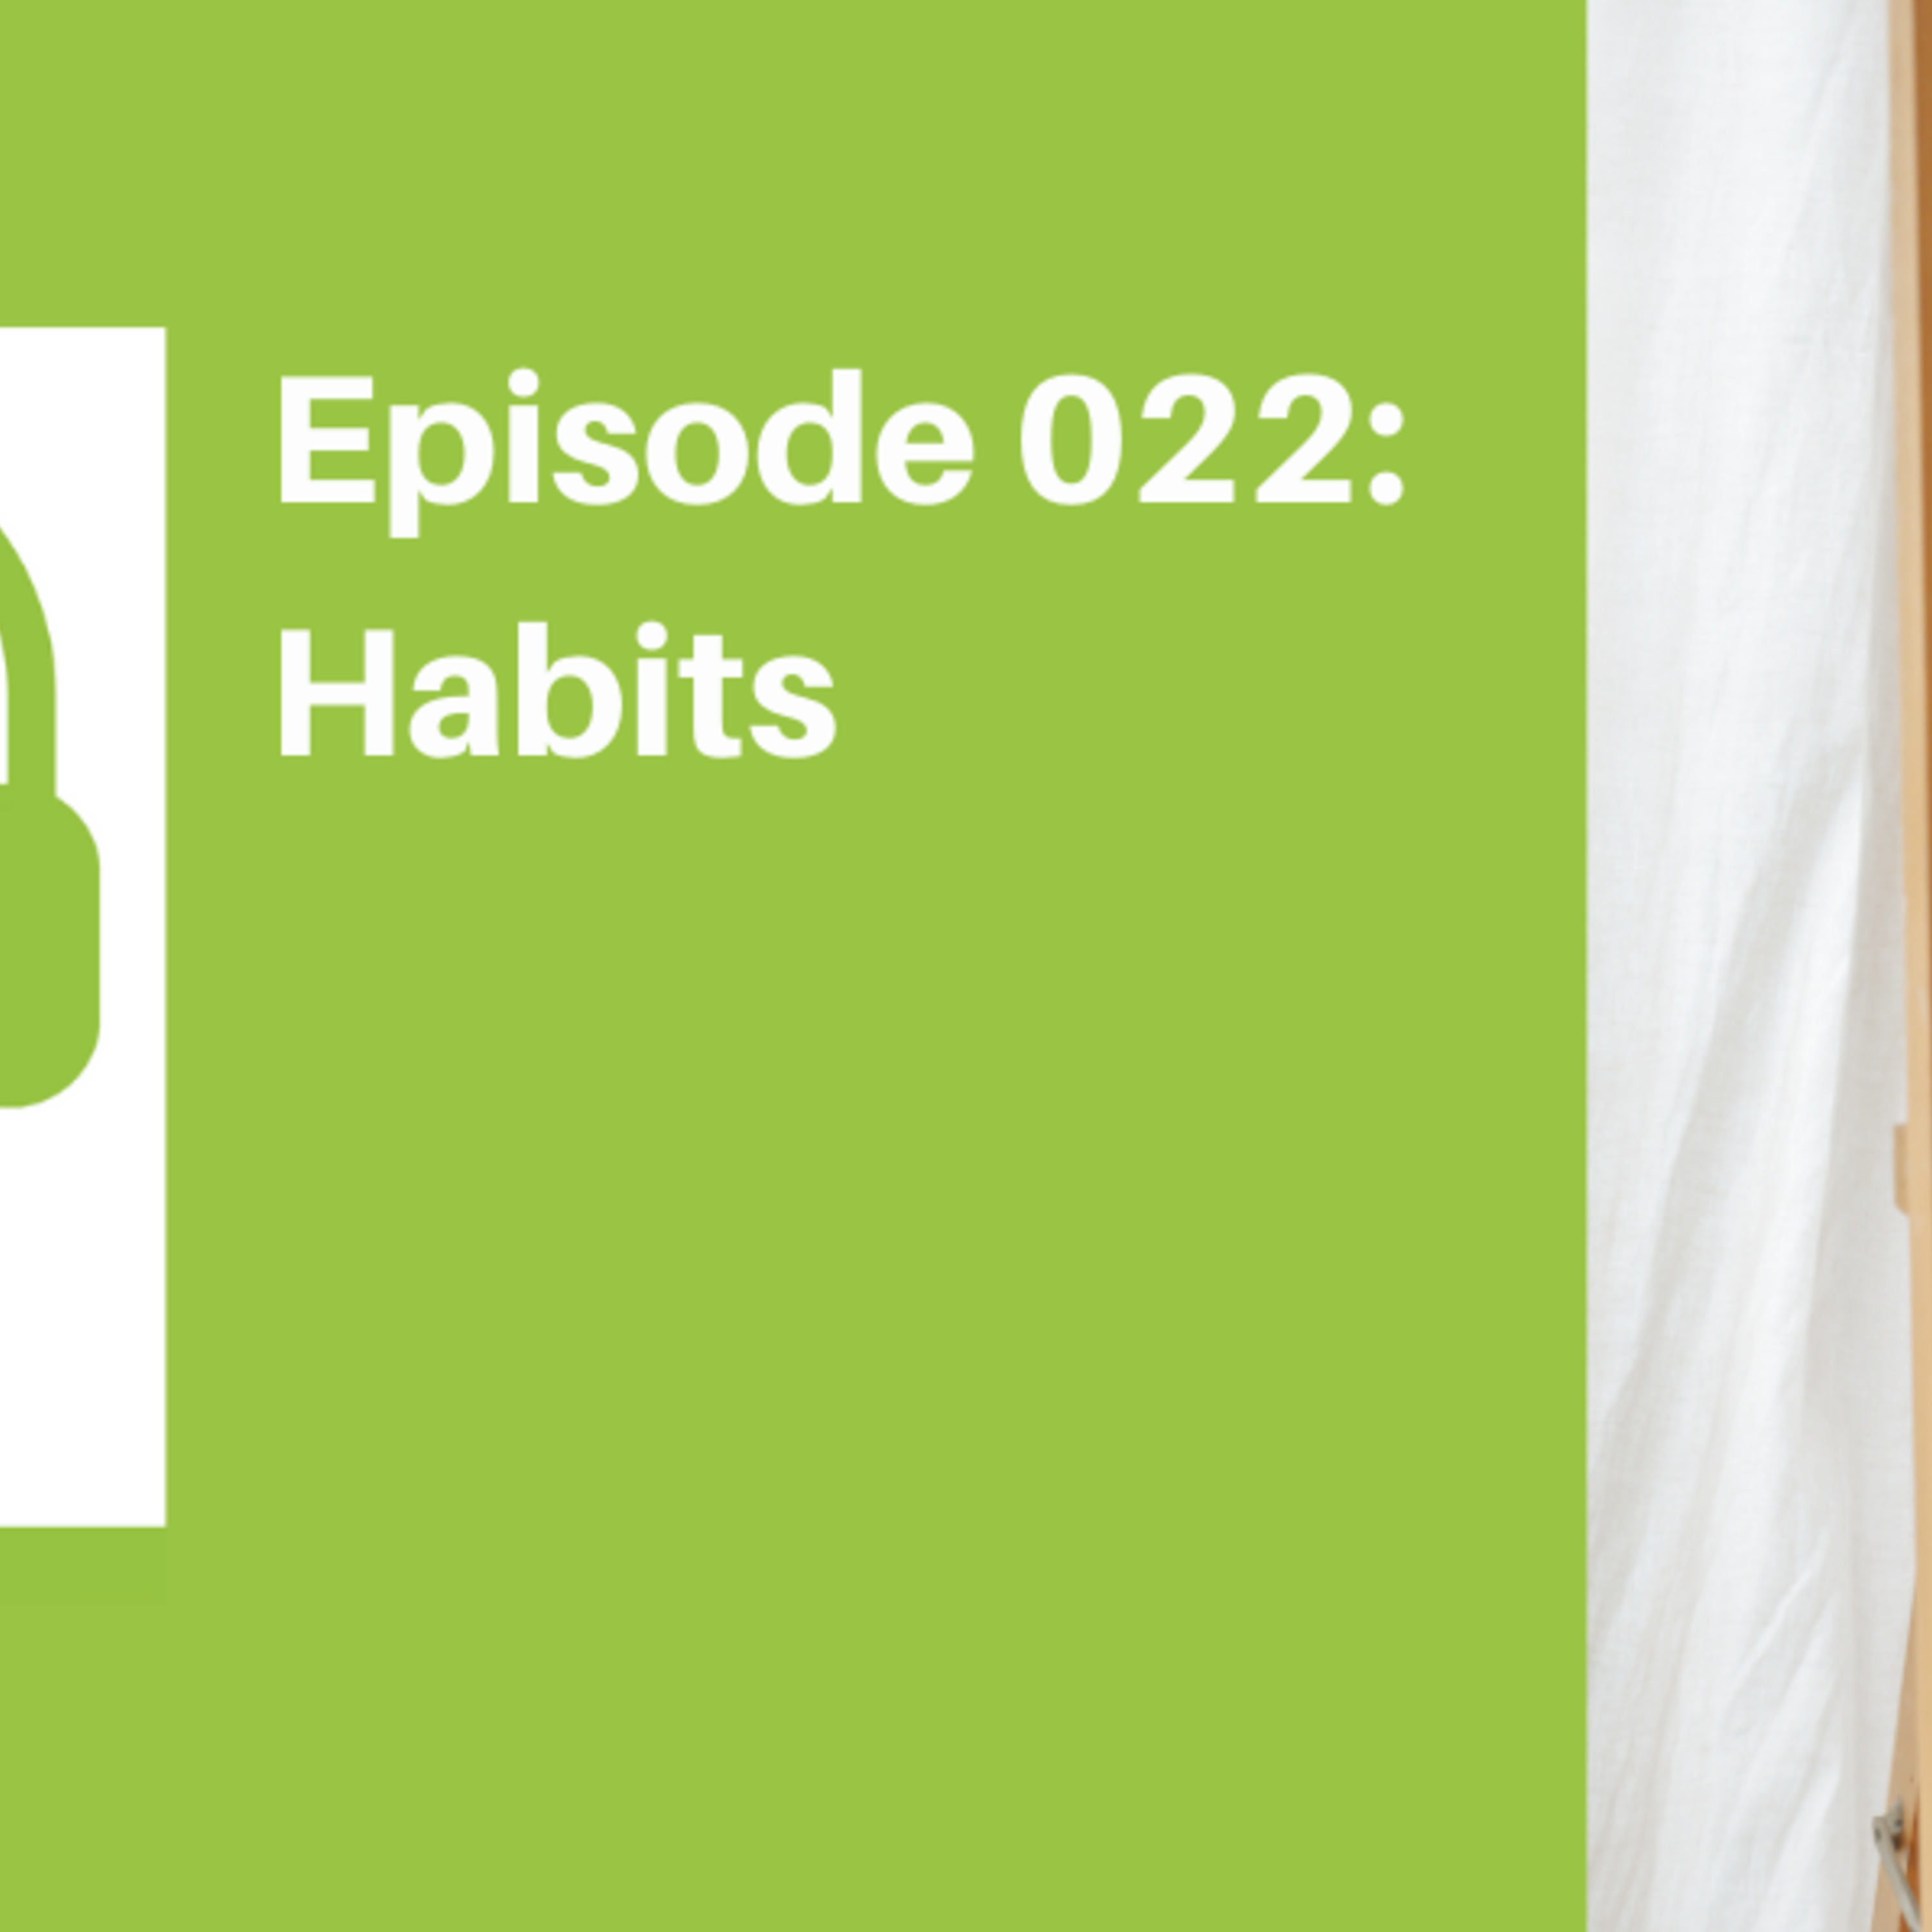 Episode 022: Habits